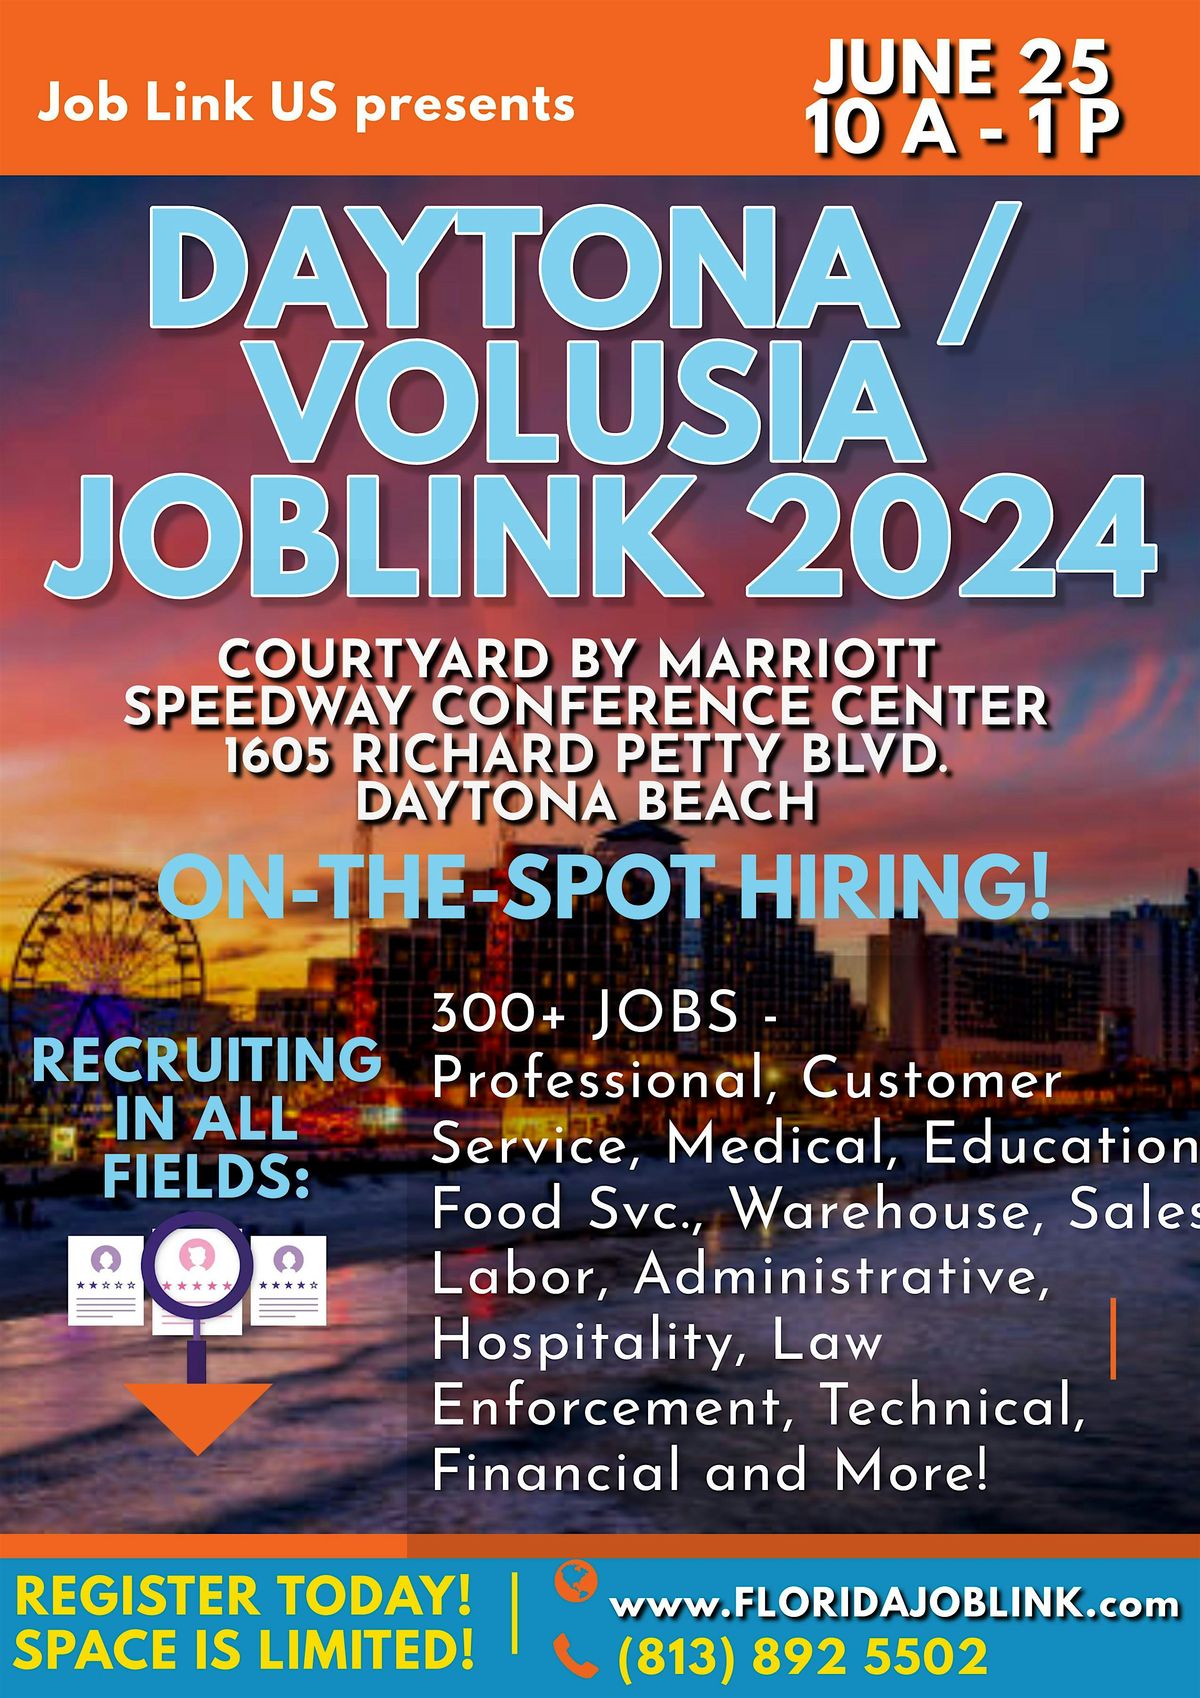 DAYTONA \/ VOLUSIA JOBLINK JOB FAIR - JOB LINK 2024 - JUNE 25